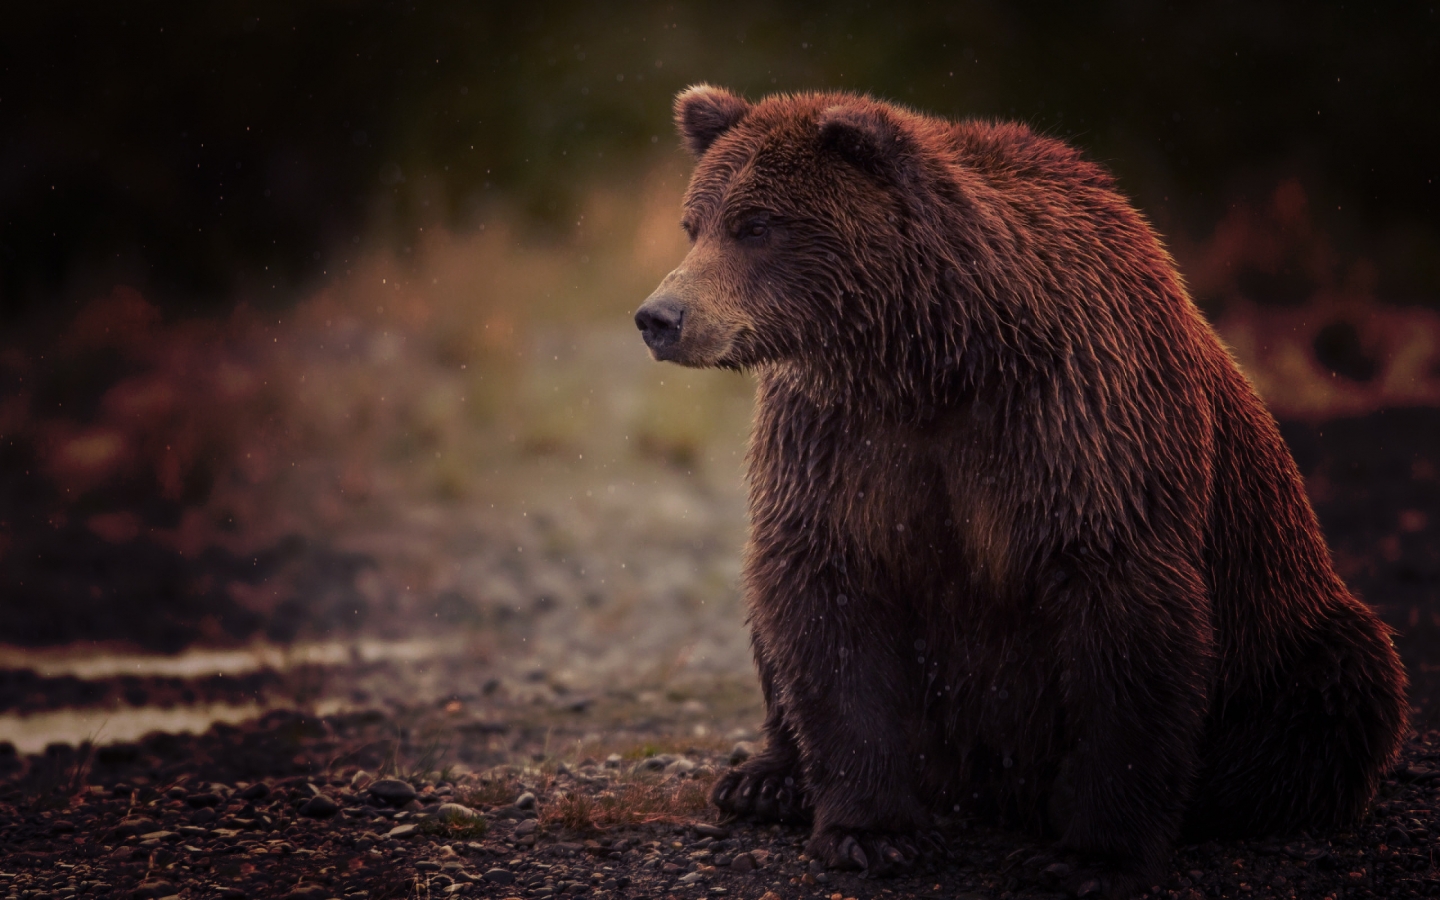 Sad Bear for 1440 x 900 widescreen resolution